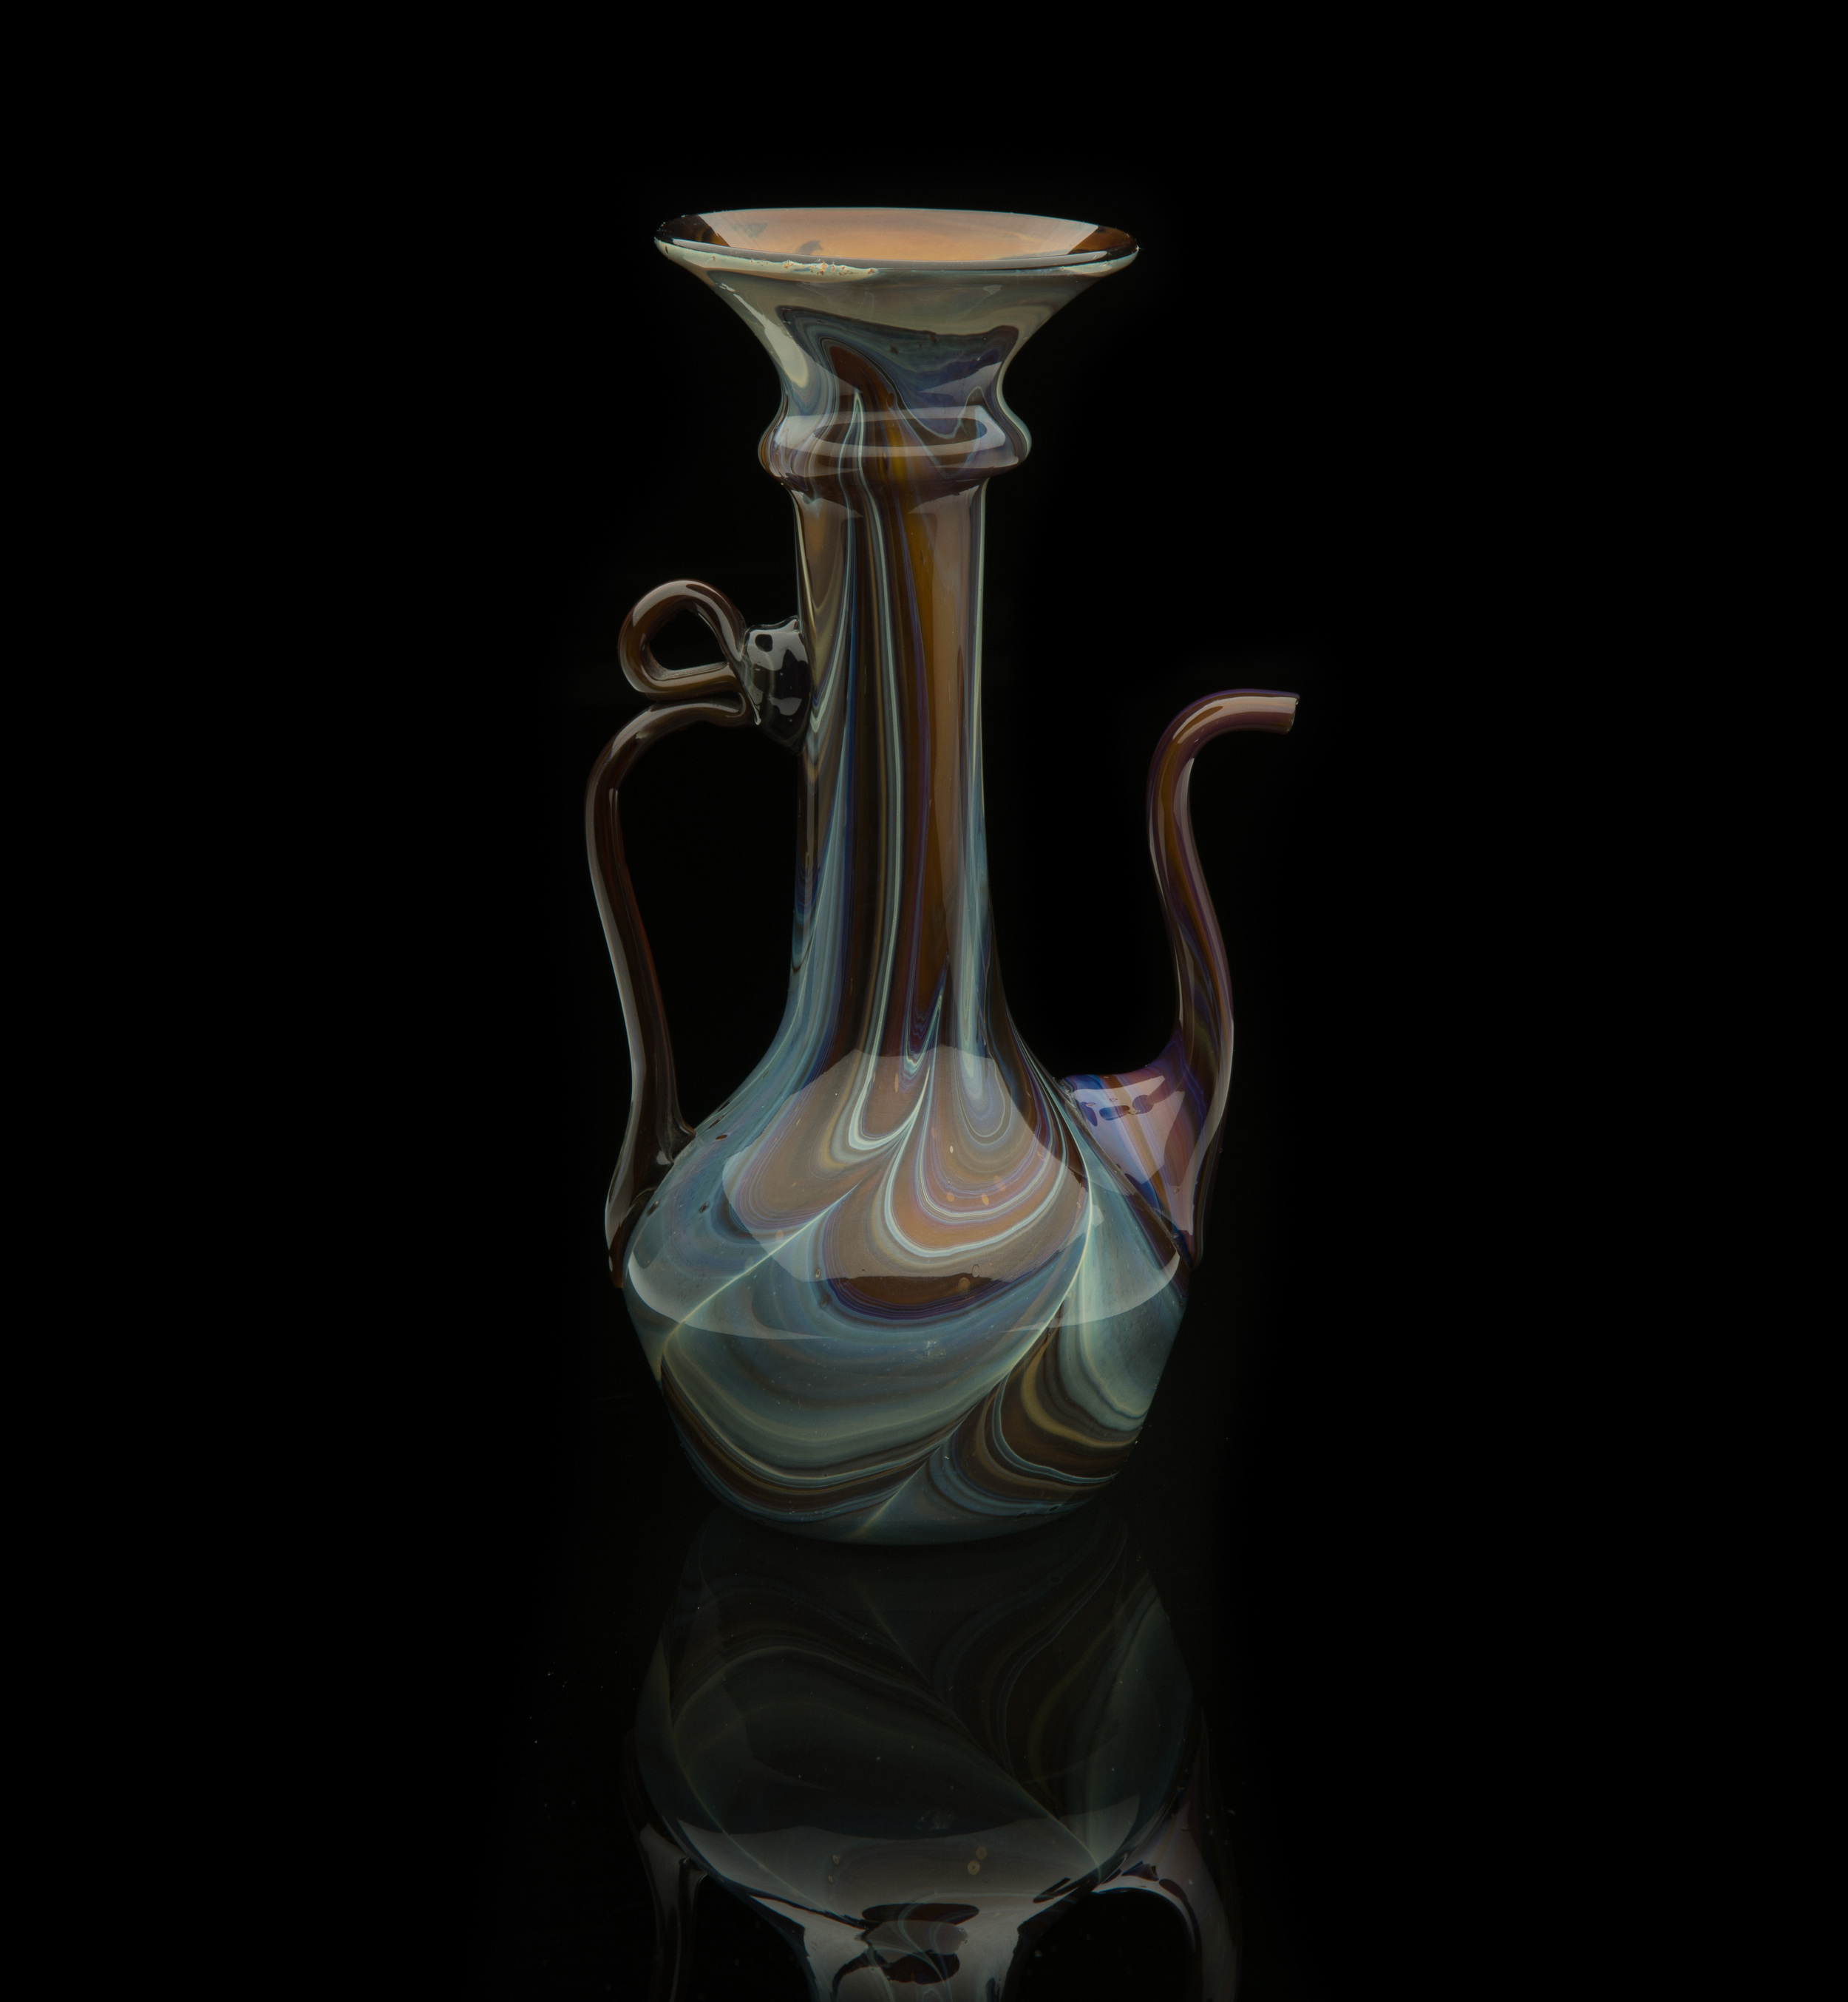  Lorenzo Radi,&nbsp; Chalcedony Ewer&nbsp; (1850-1900, glass, 8 7/16 inches), VV.363 